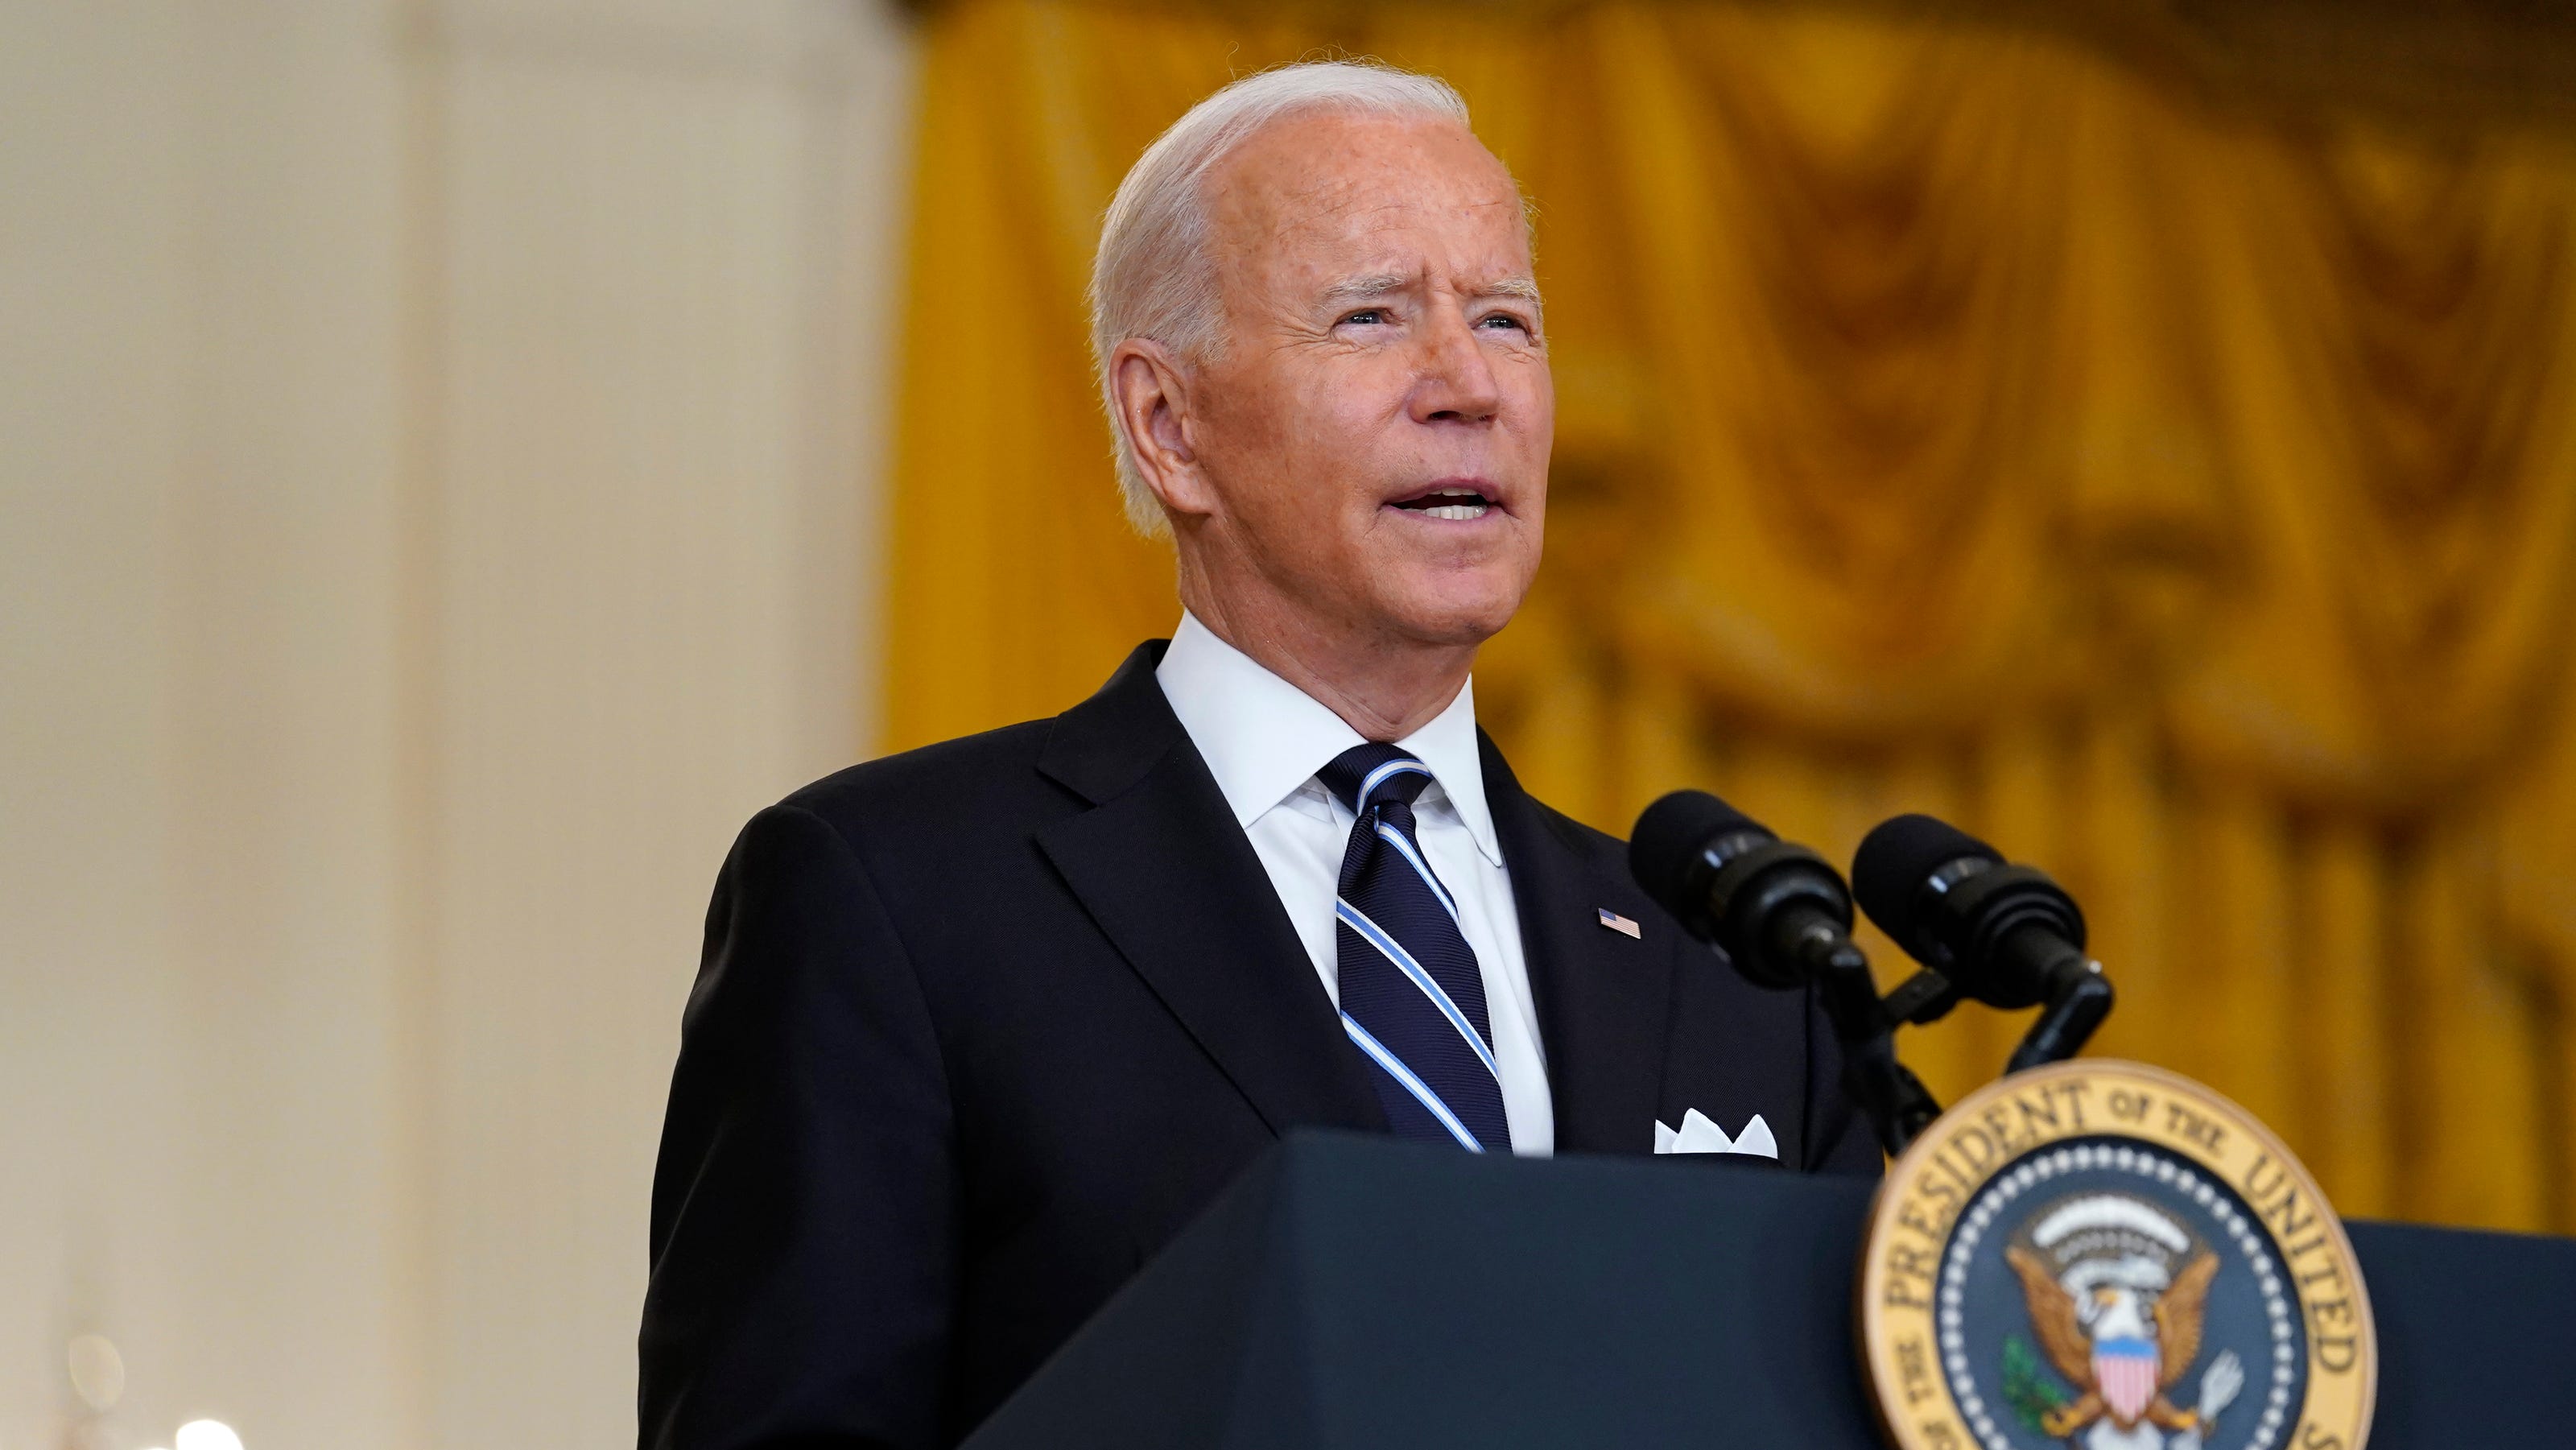 Fact check: Biden didn't 'gift' Taliban weapons